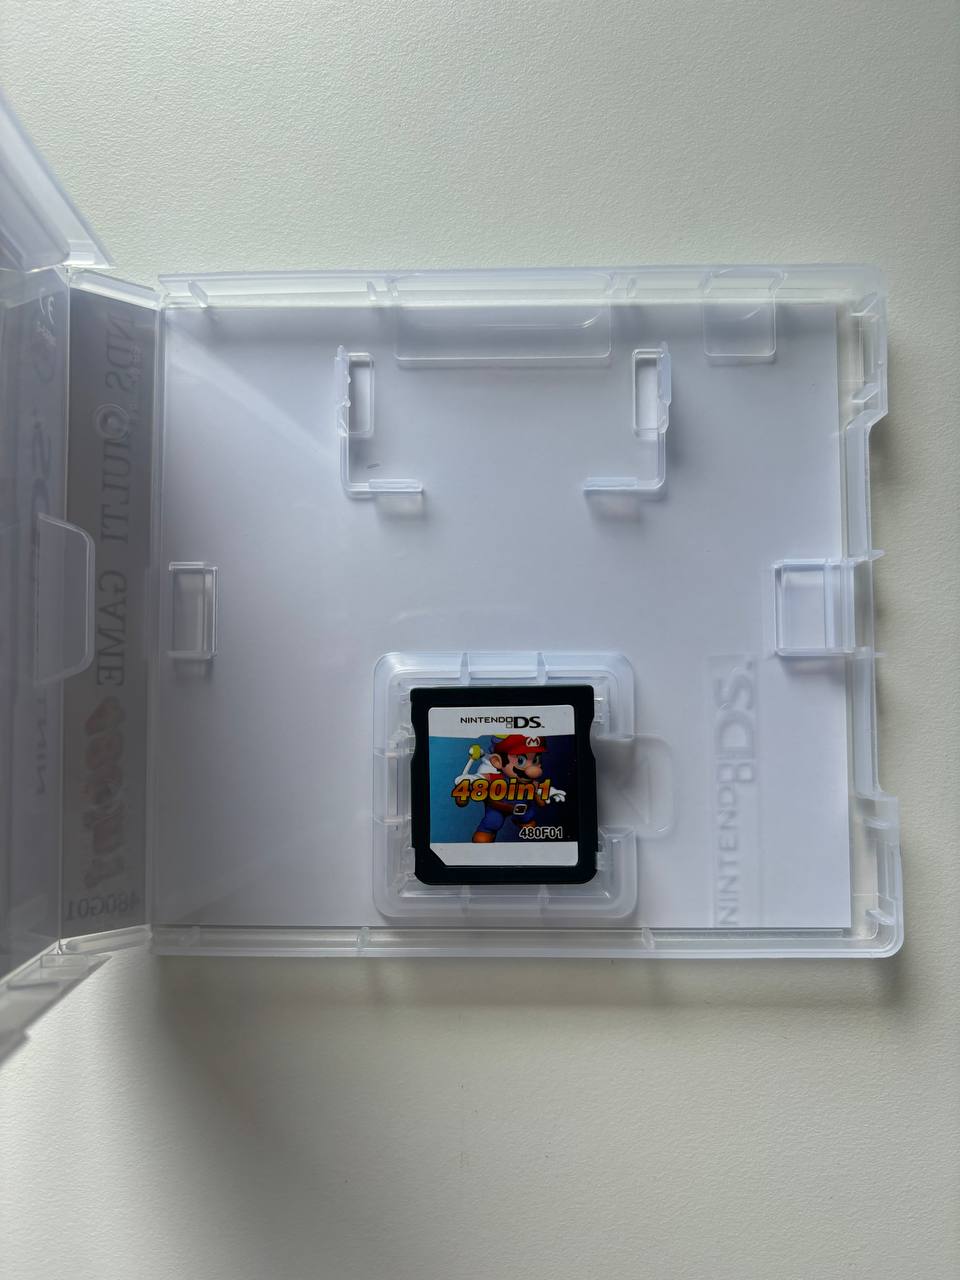 Multi Game 480 in 1 Nintendo DS 3DS